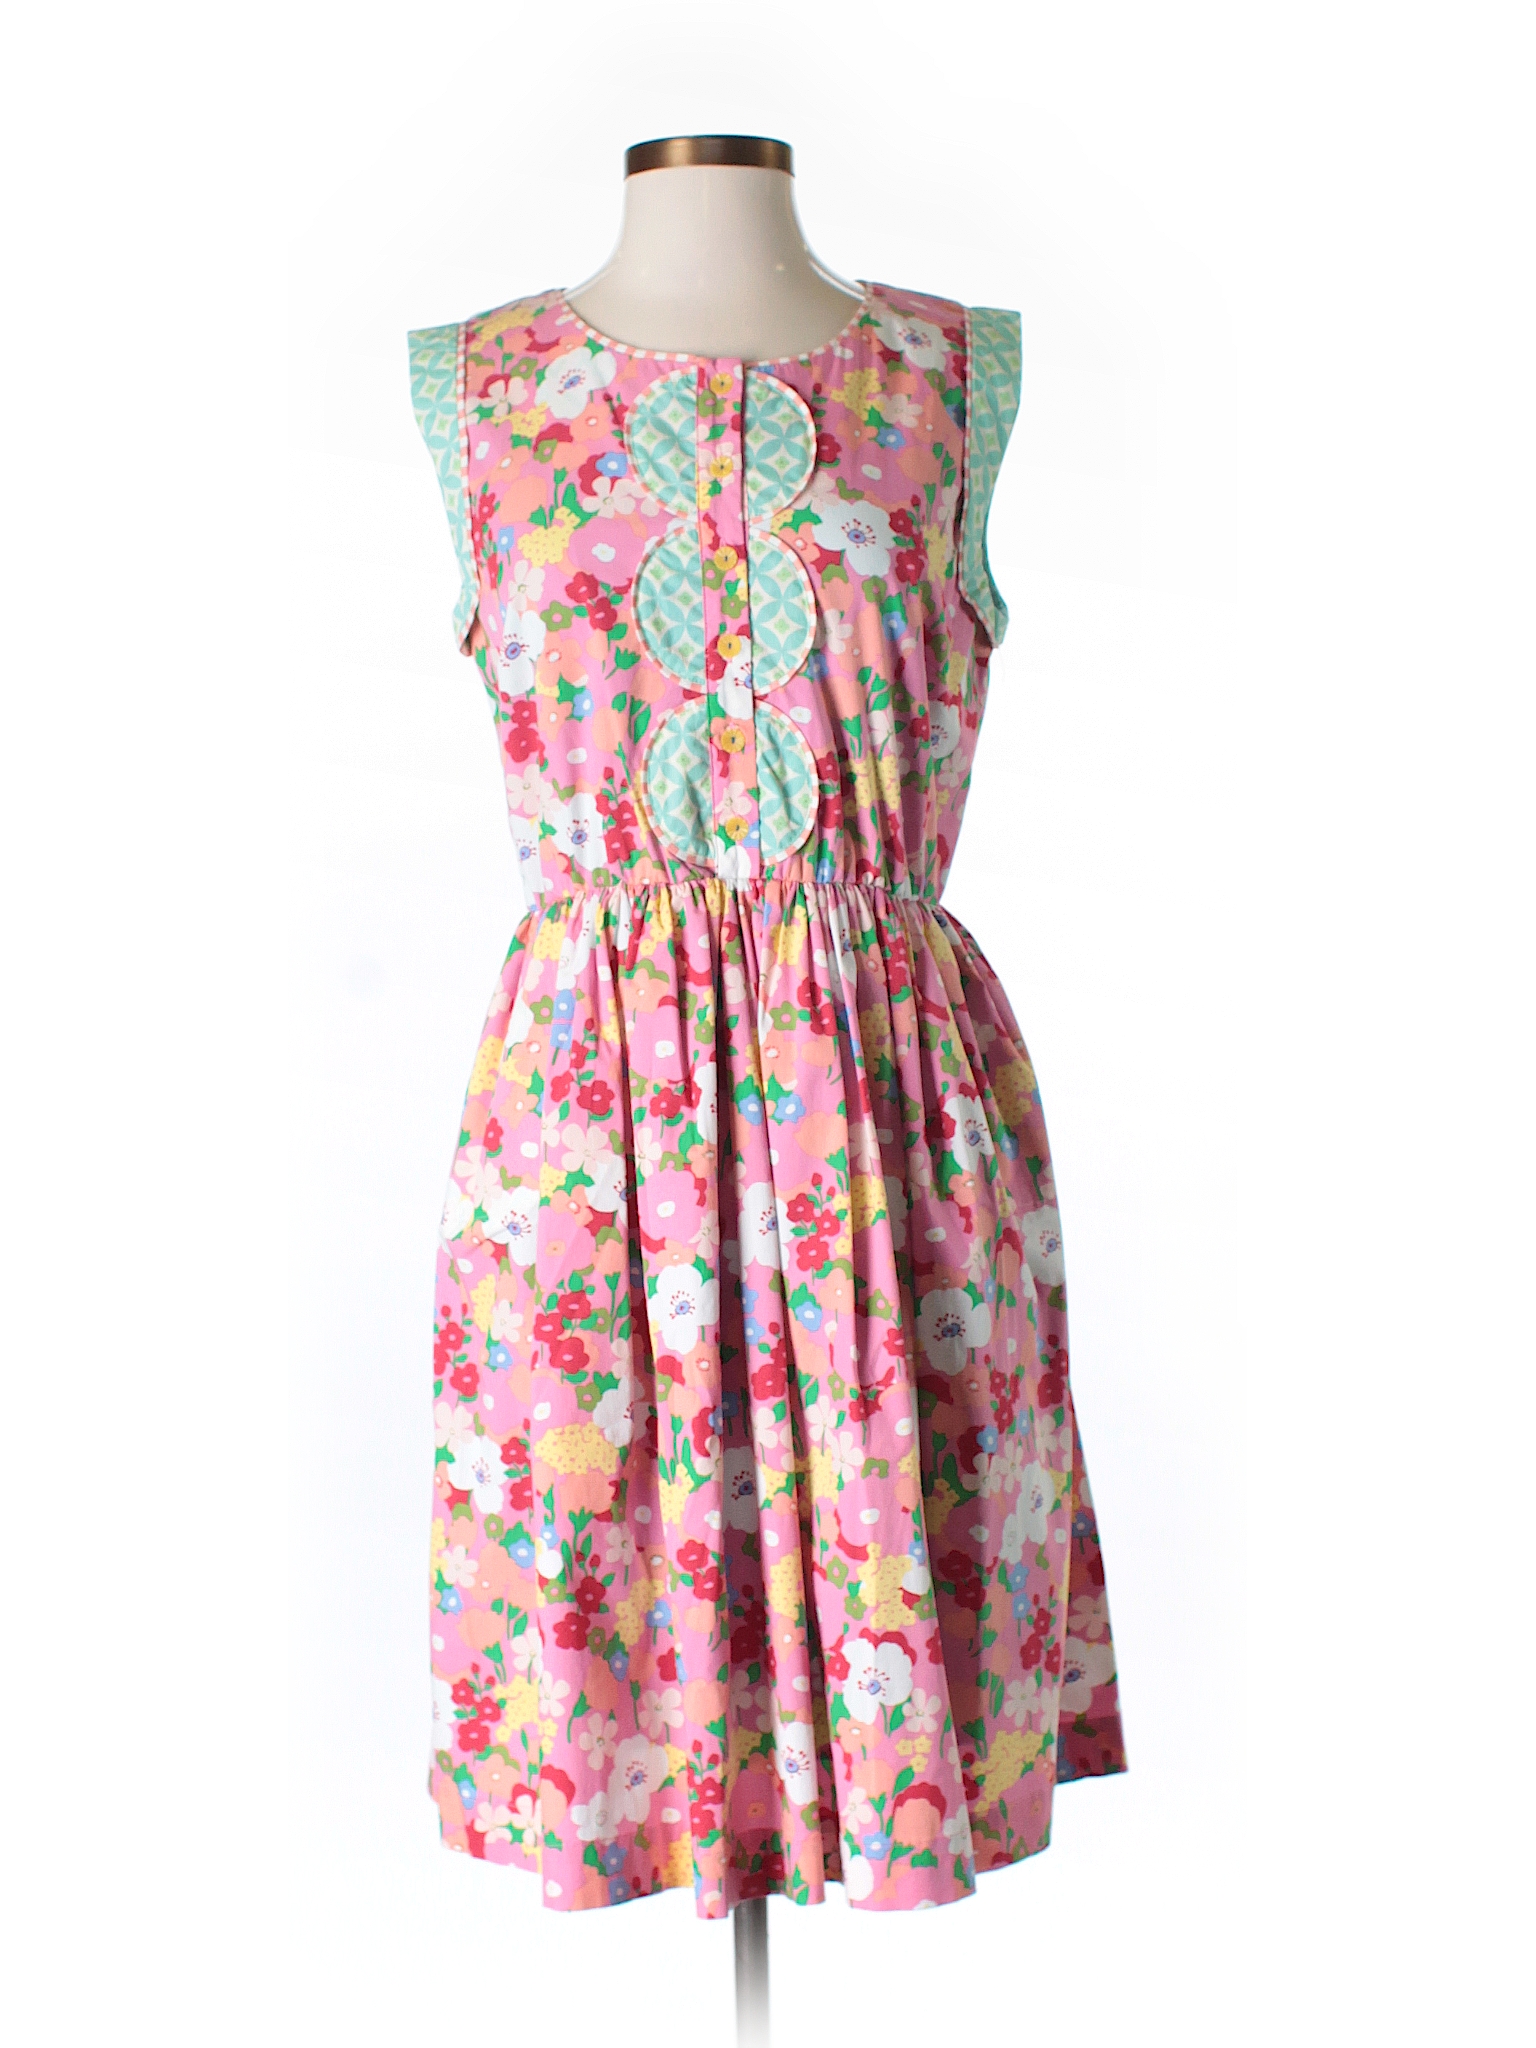 Matilda Jane Print Pink Casual Dress Size M - 67% off | thredUP